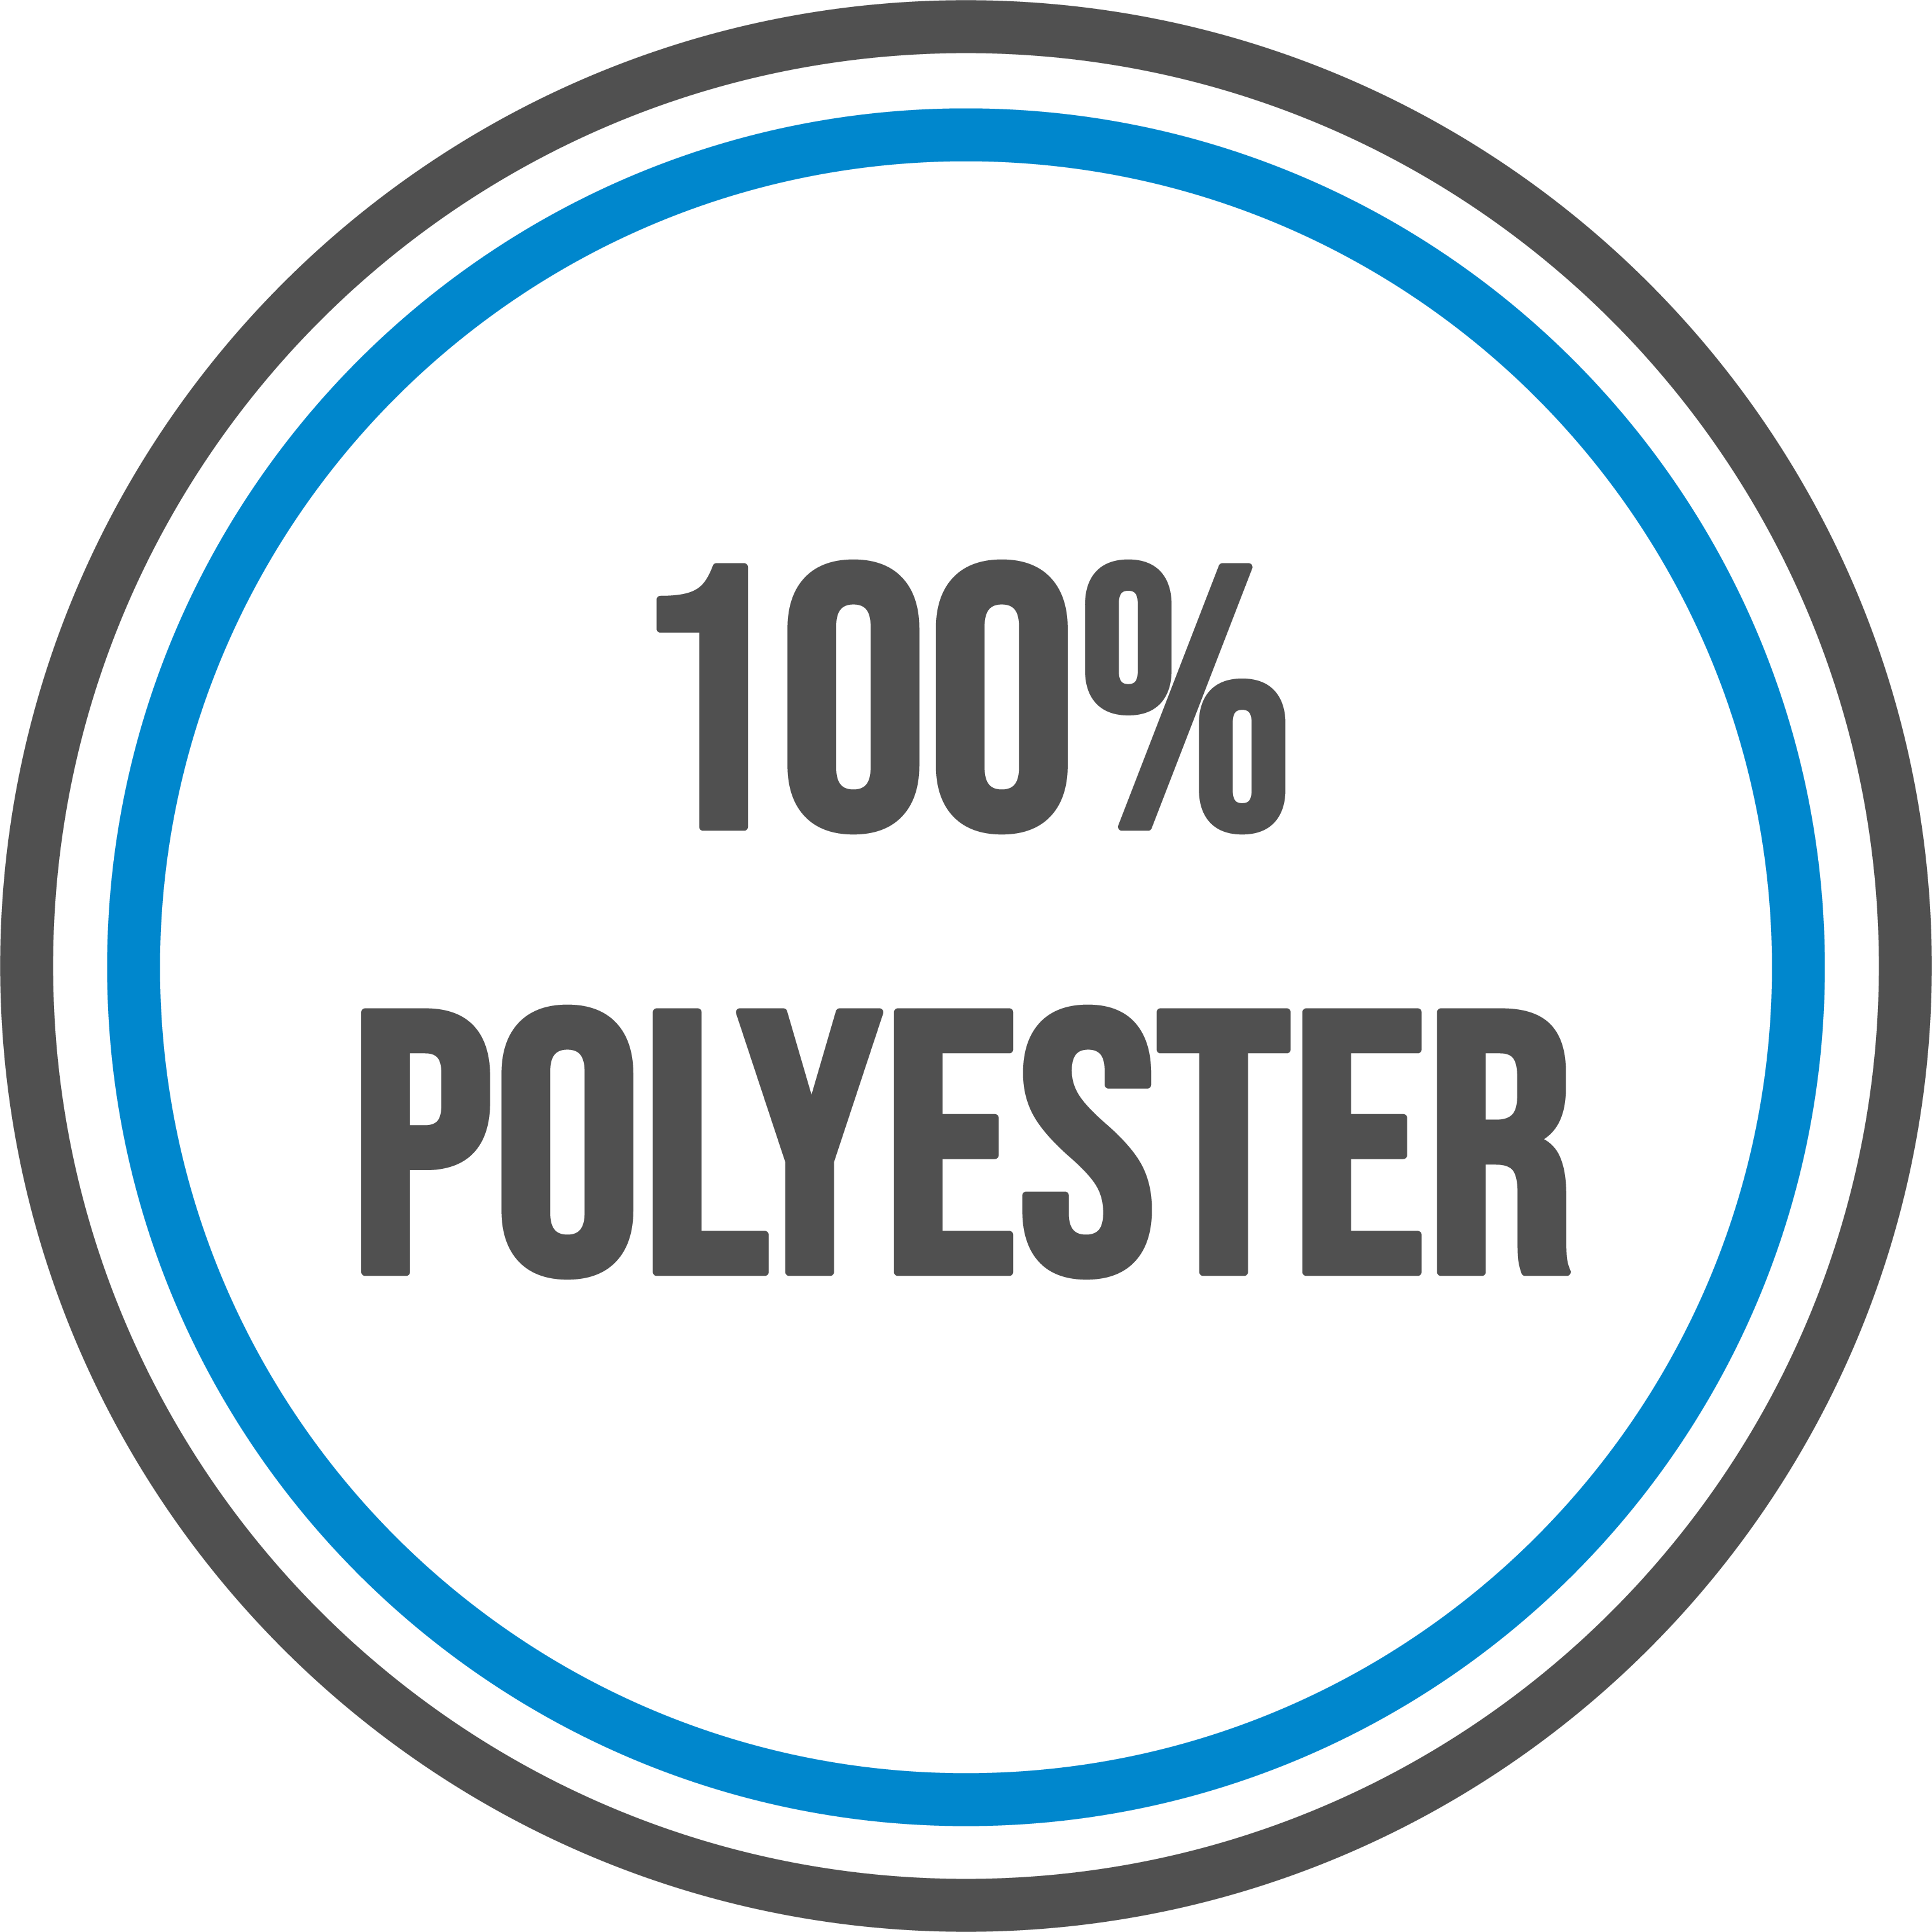 Telt i 100% polyester